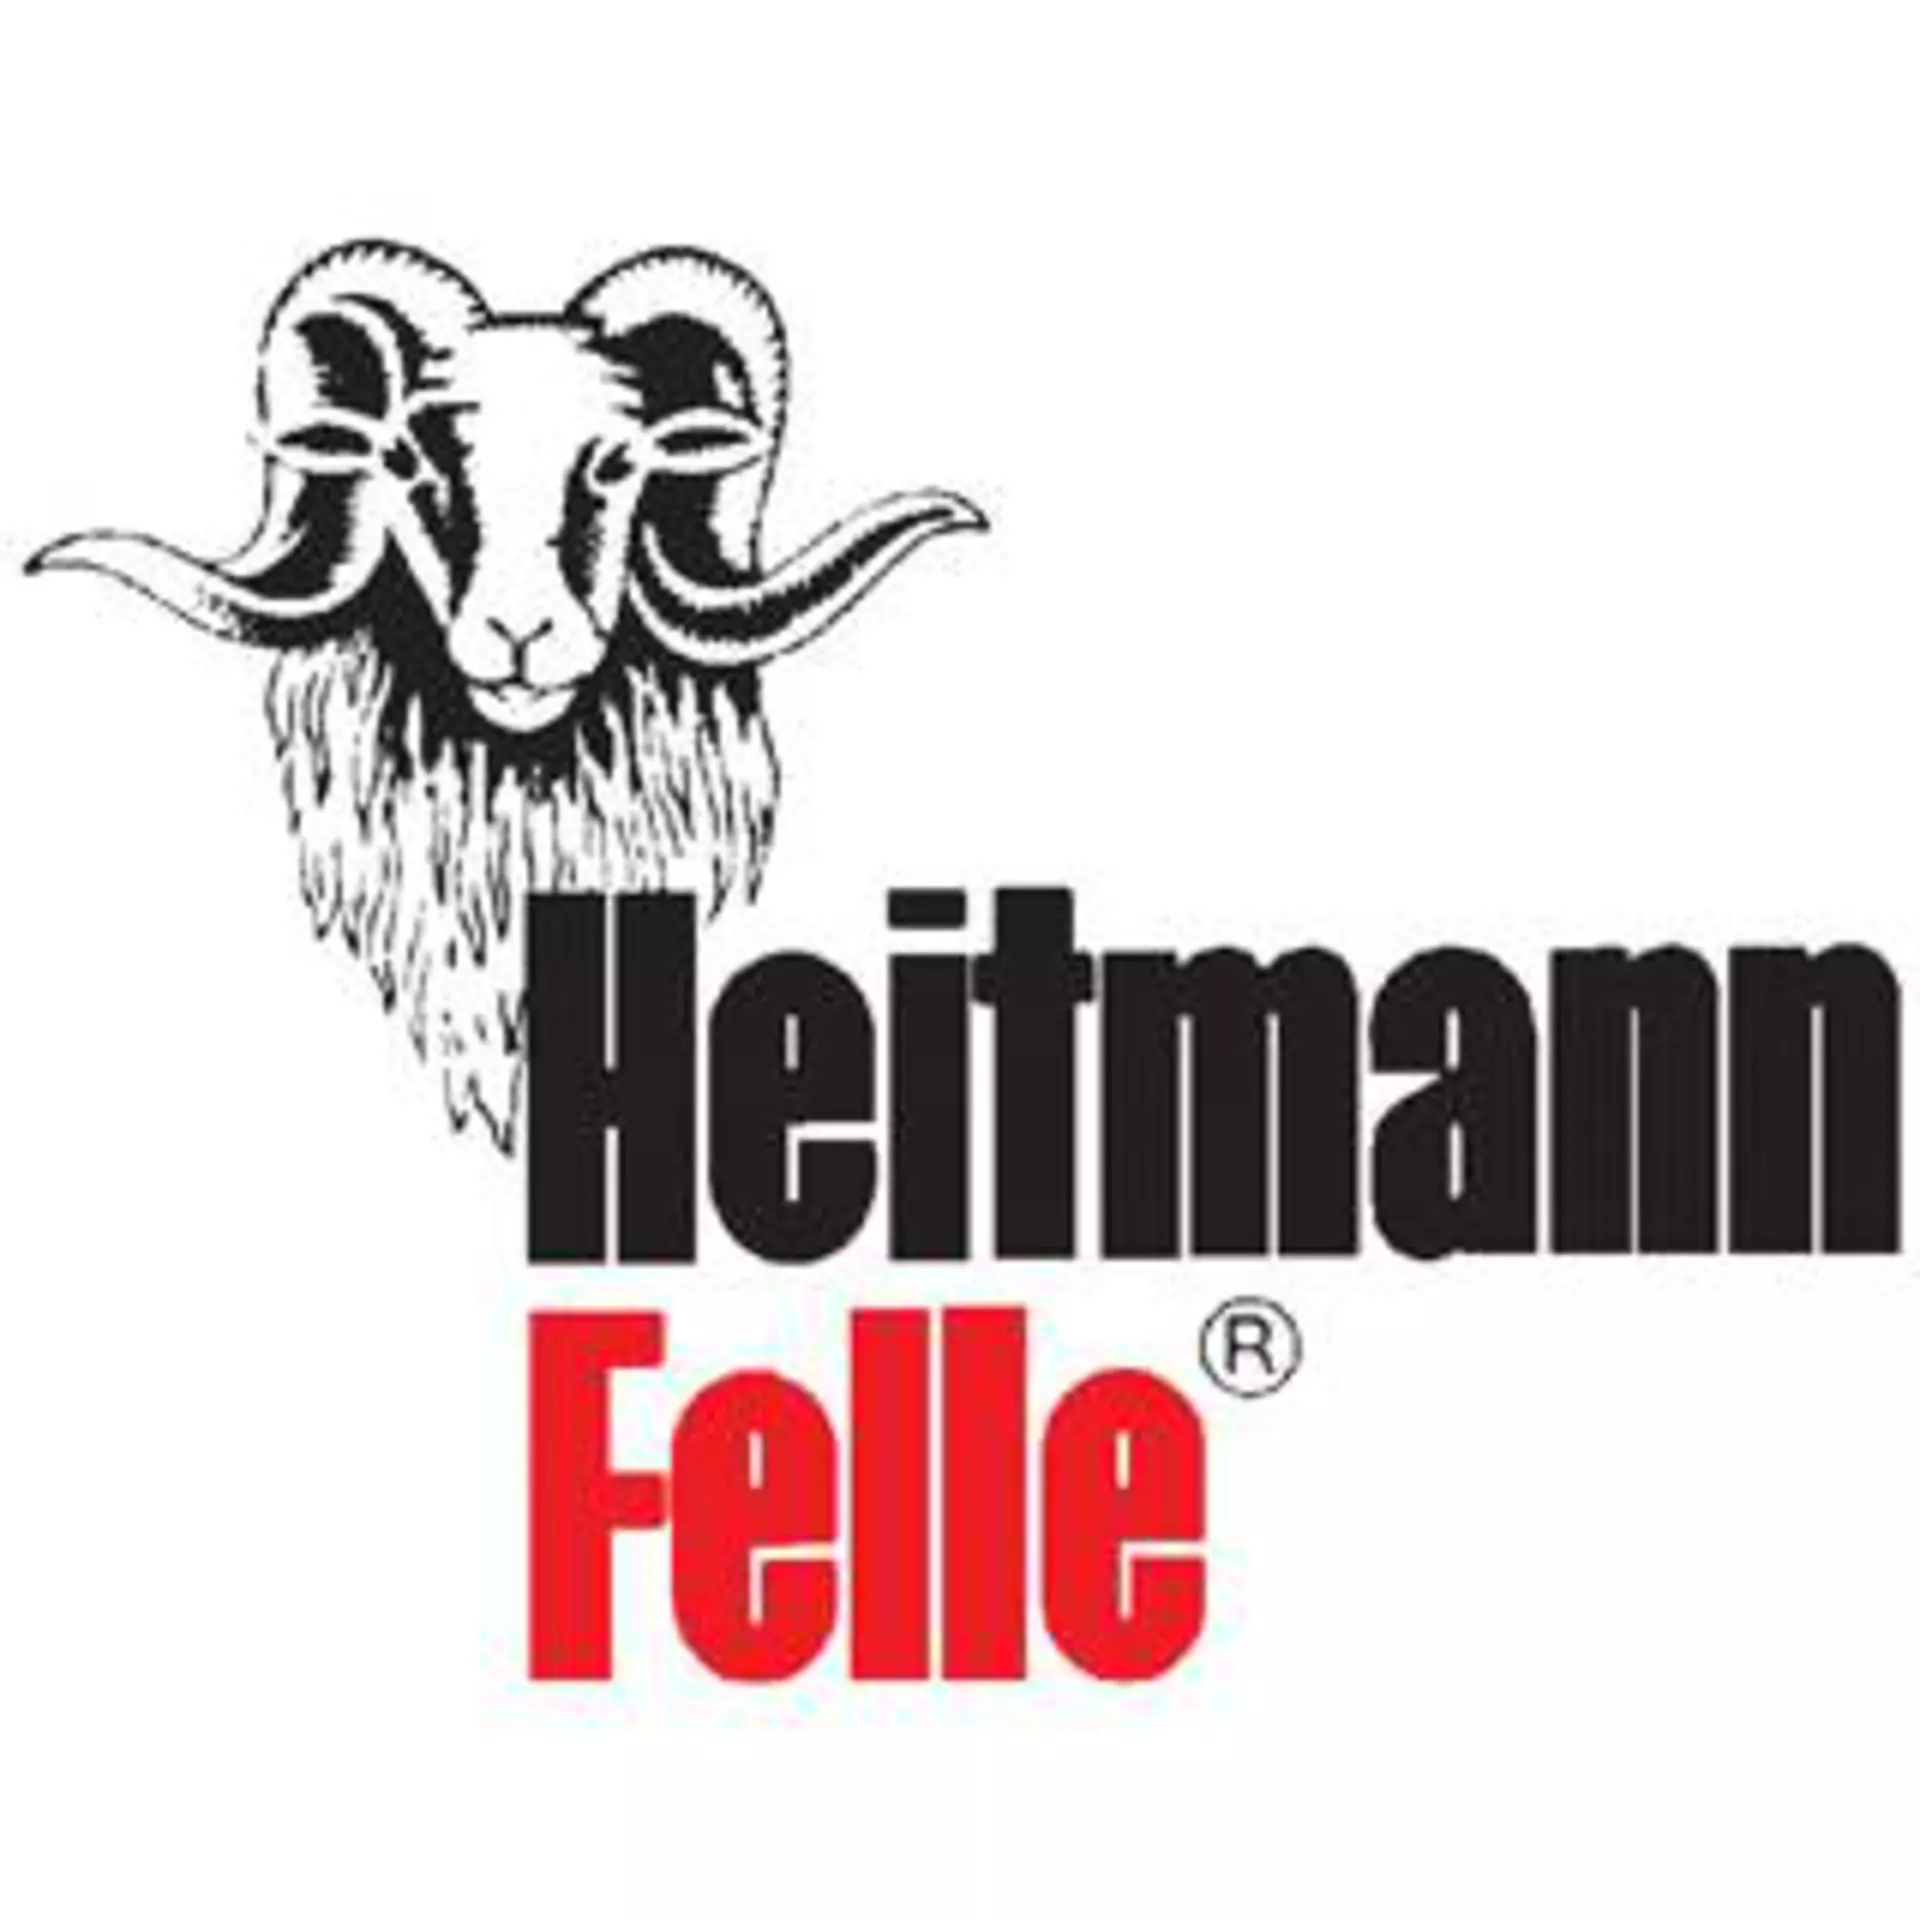 Heitmann-Felle, Felle, Heimtextilien bei Möbel Inhofer